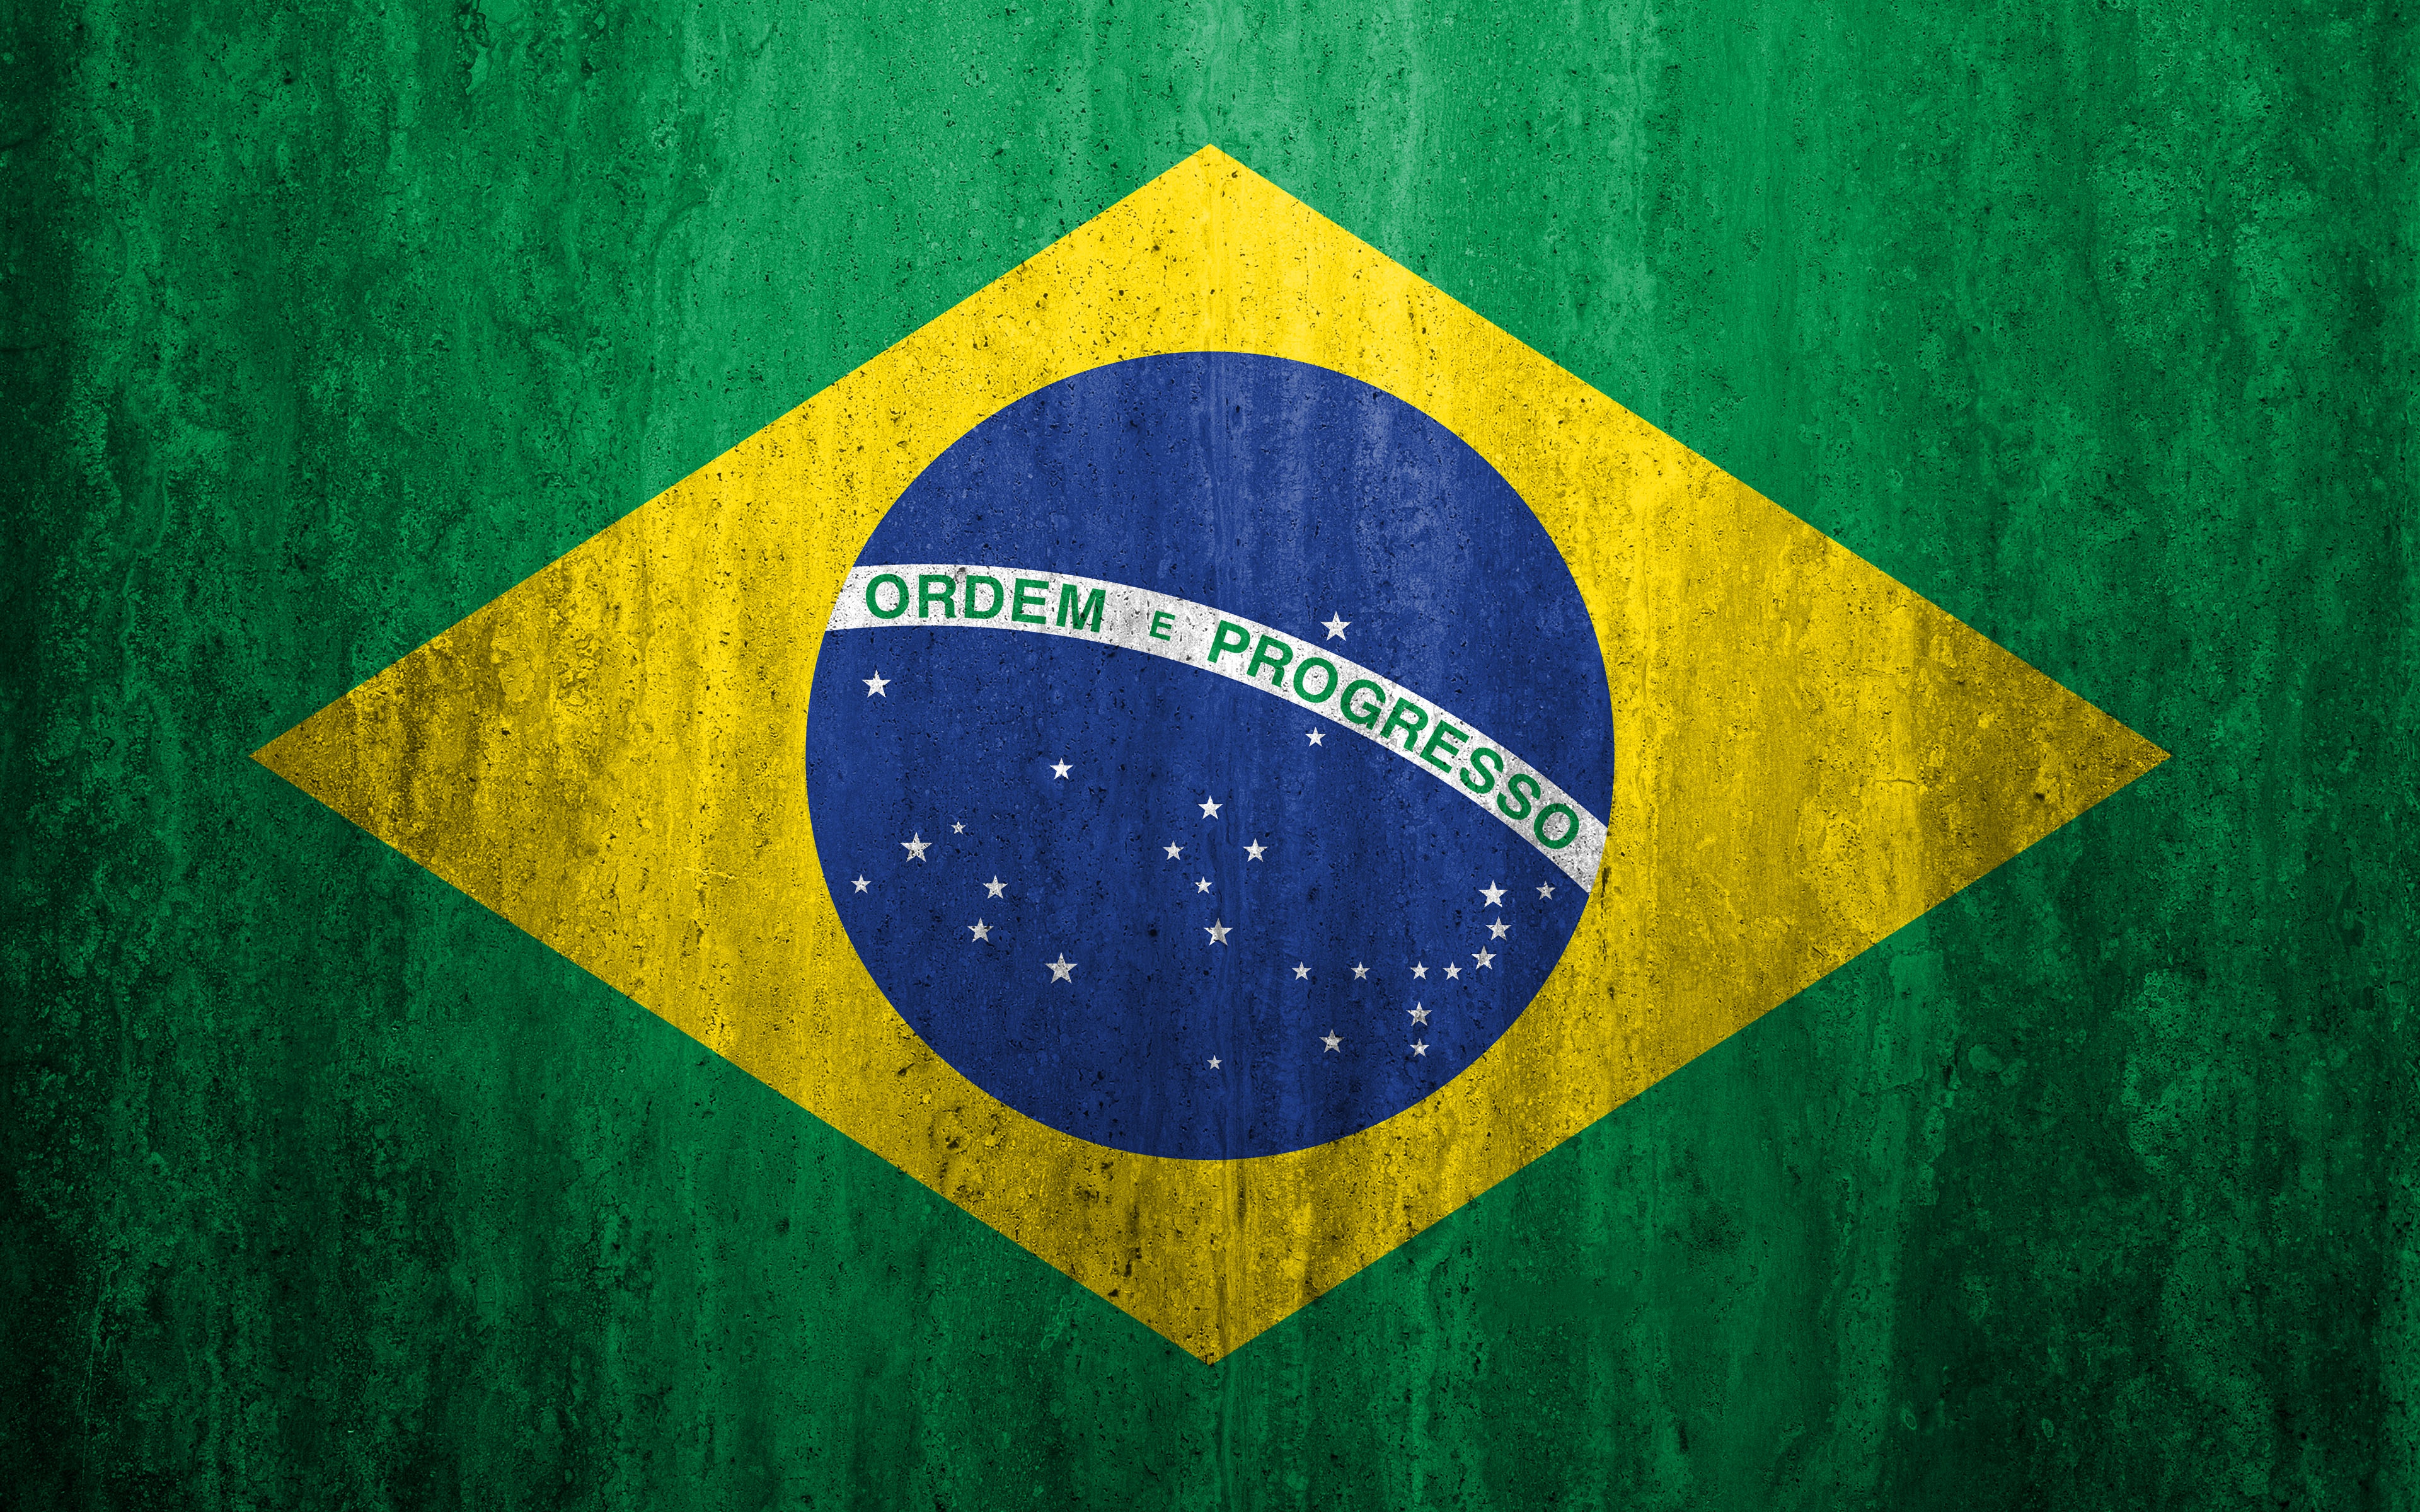 Brazil Flag Hd Wallpapers